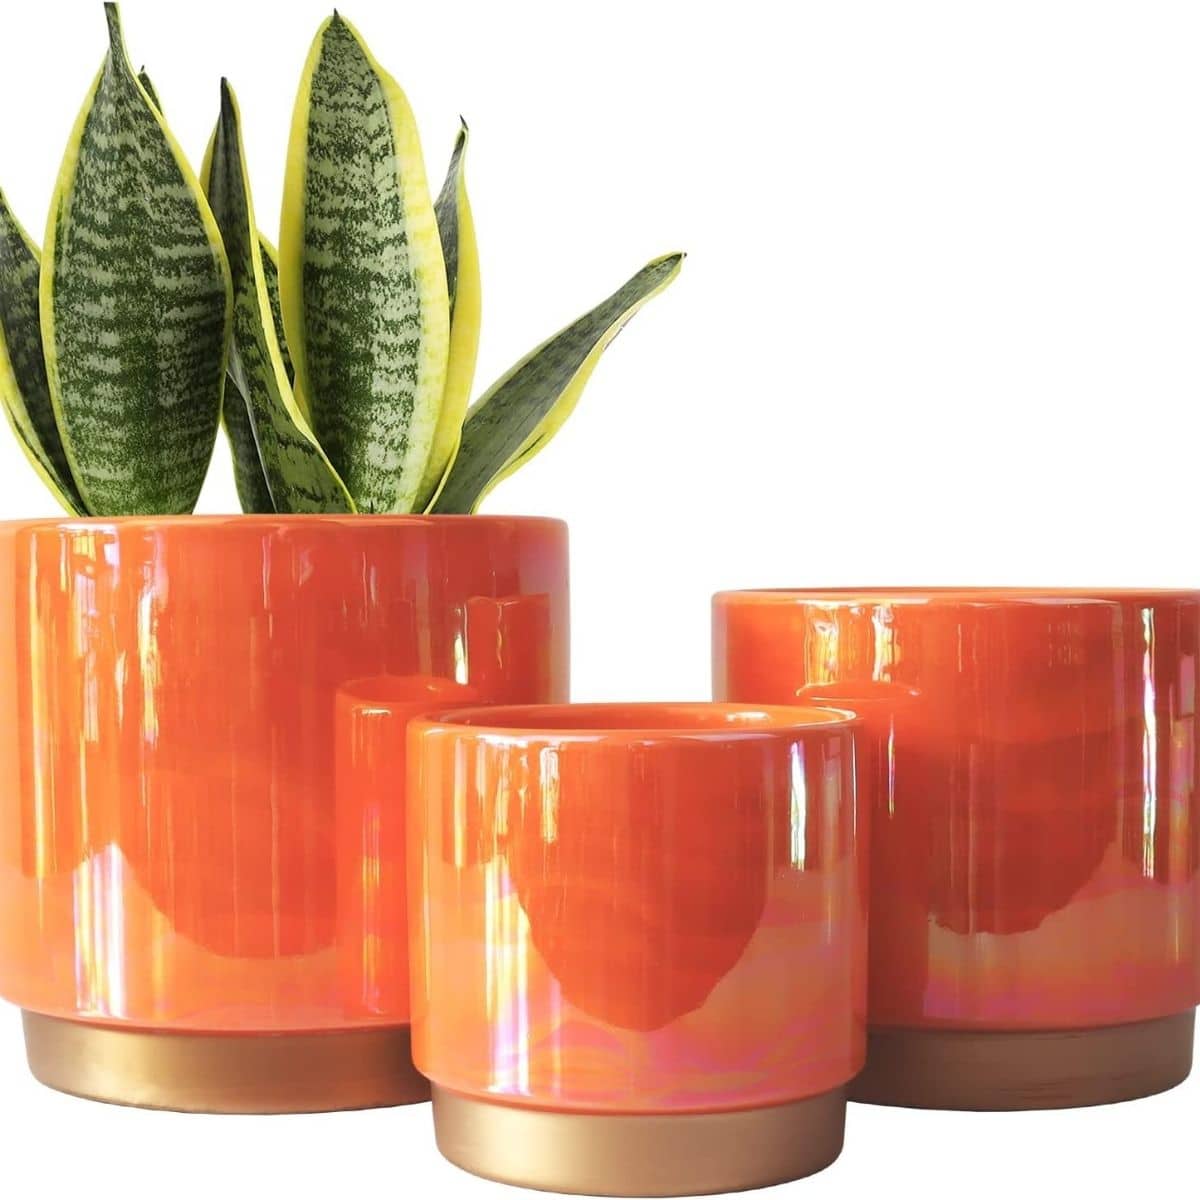 Three orange rainbow pearl glaze planter the largest pot has a snake plant inside from Amazon.